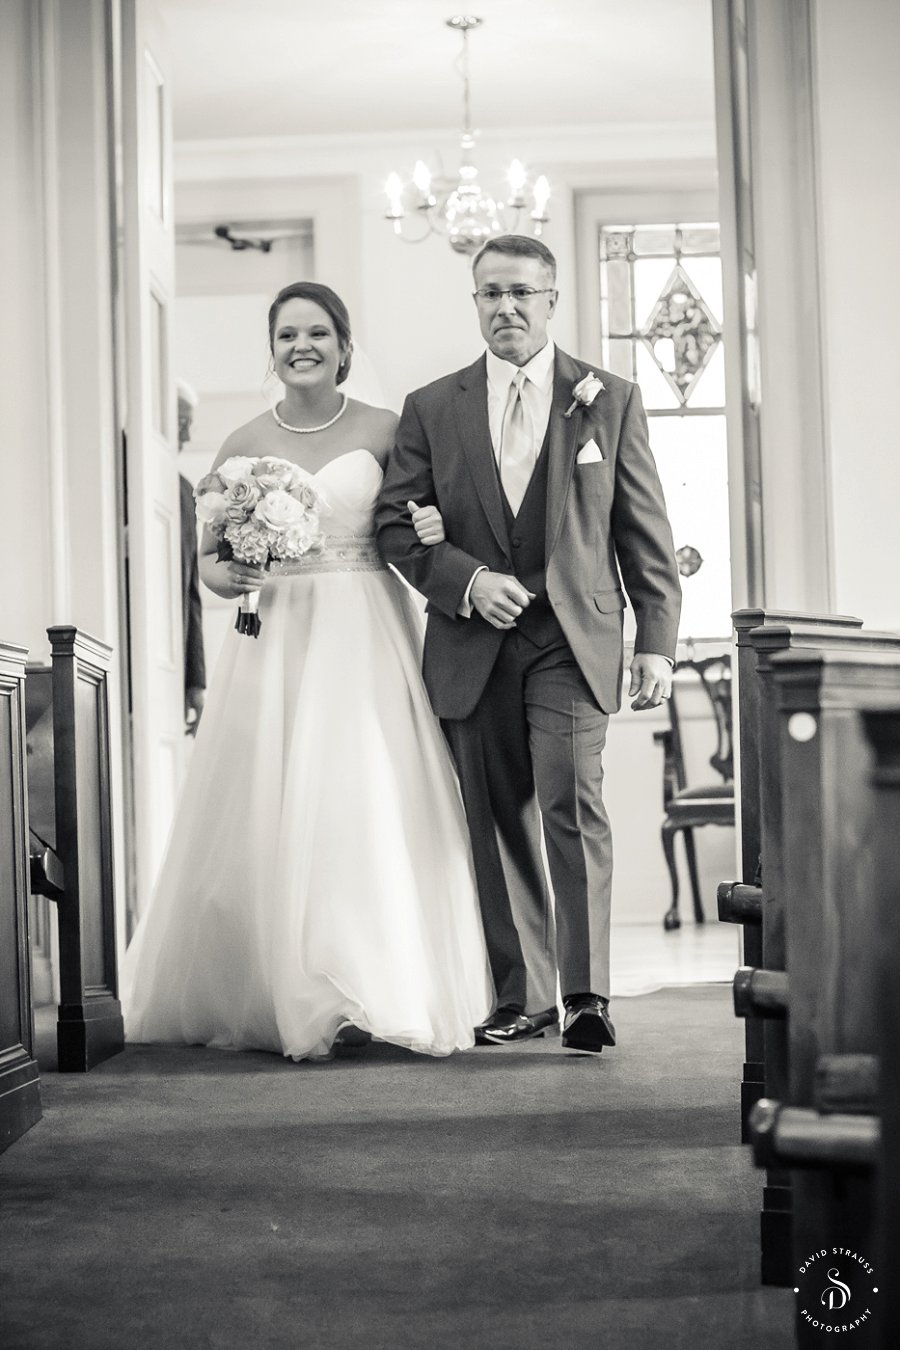 Orangeburg Wedding Photographer - David Strauss Photogrpahy - Evan and Shelbie - 20